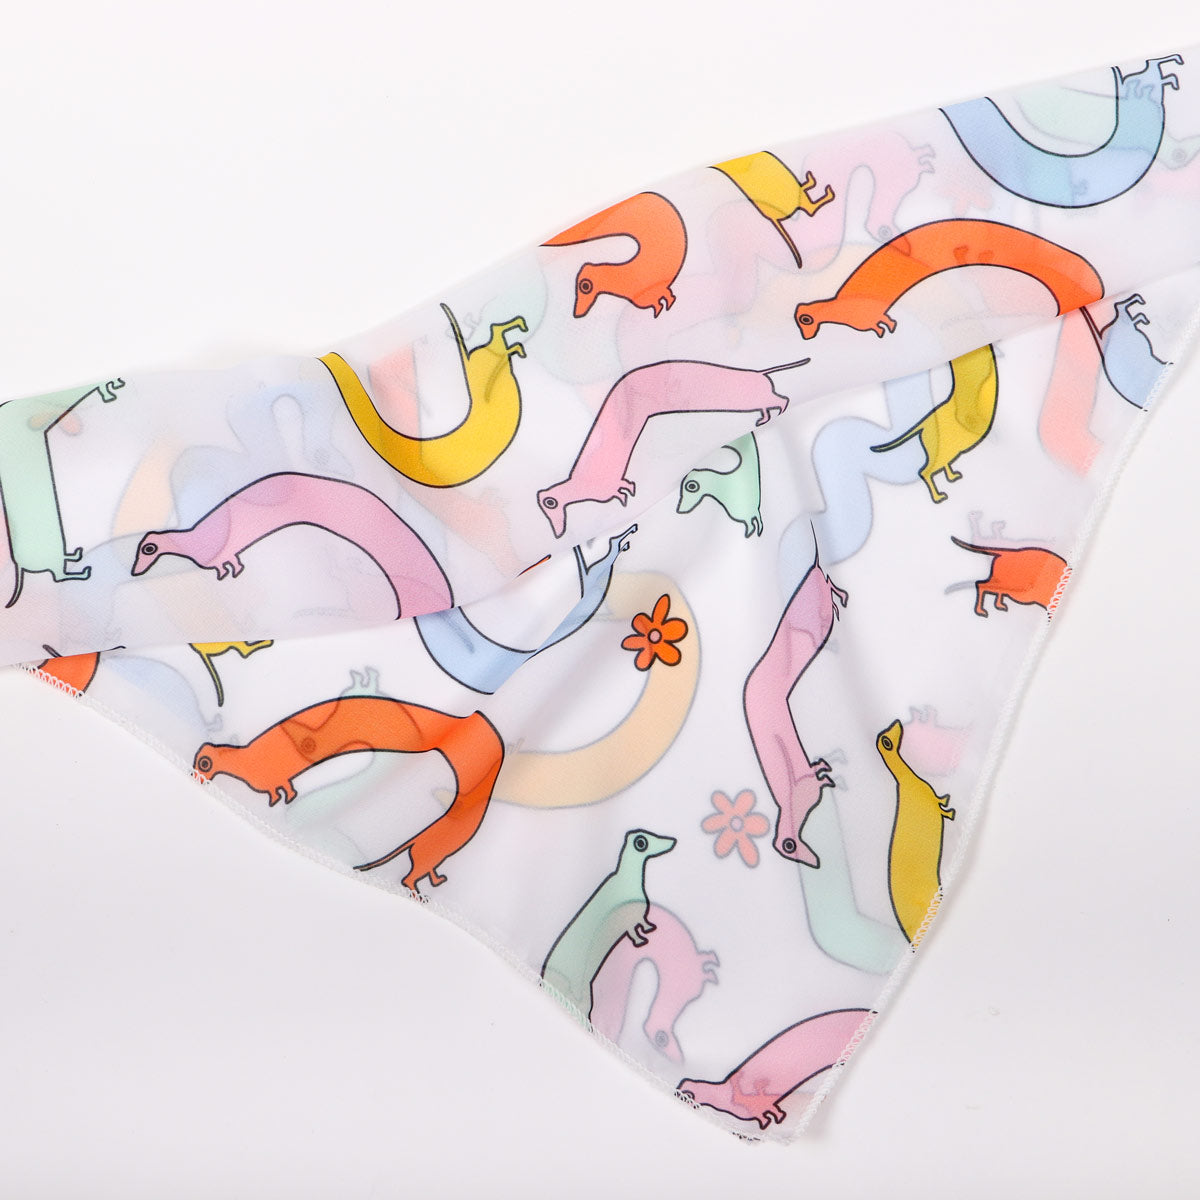 squiggly ween chiffon scarf | rainbow